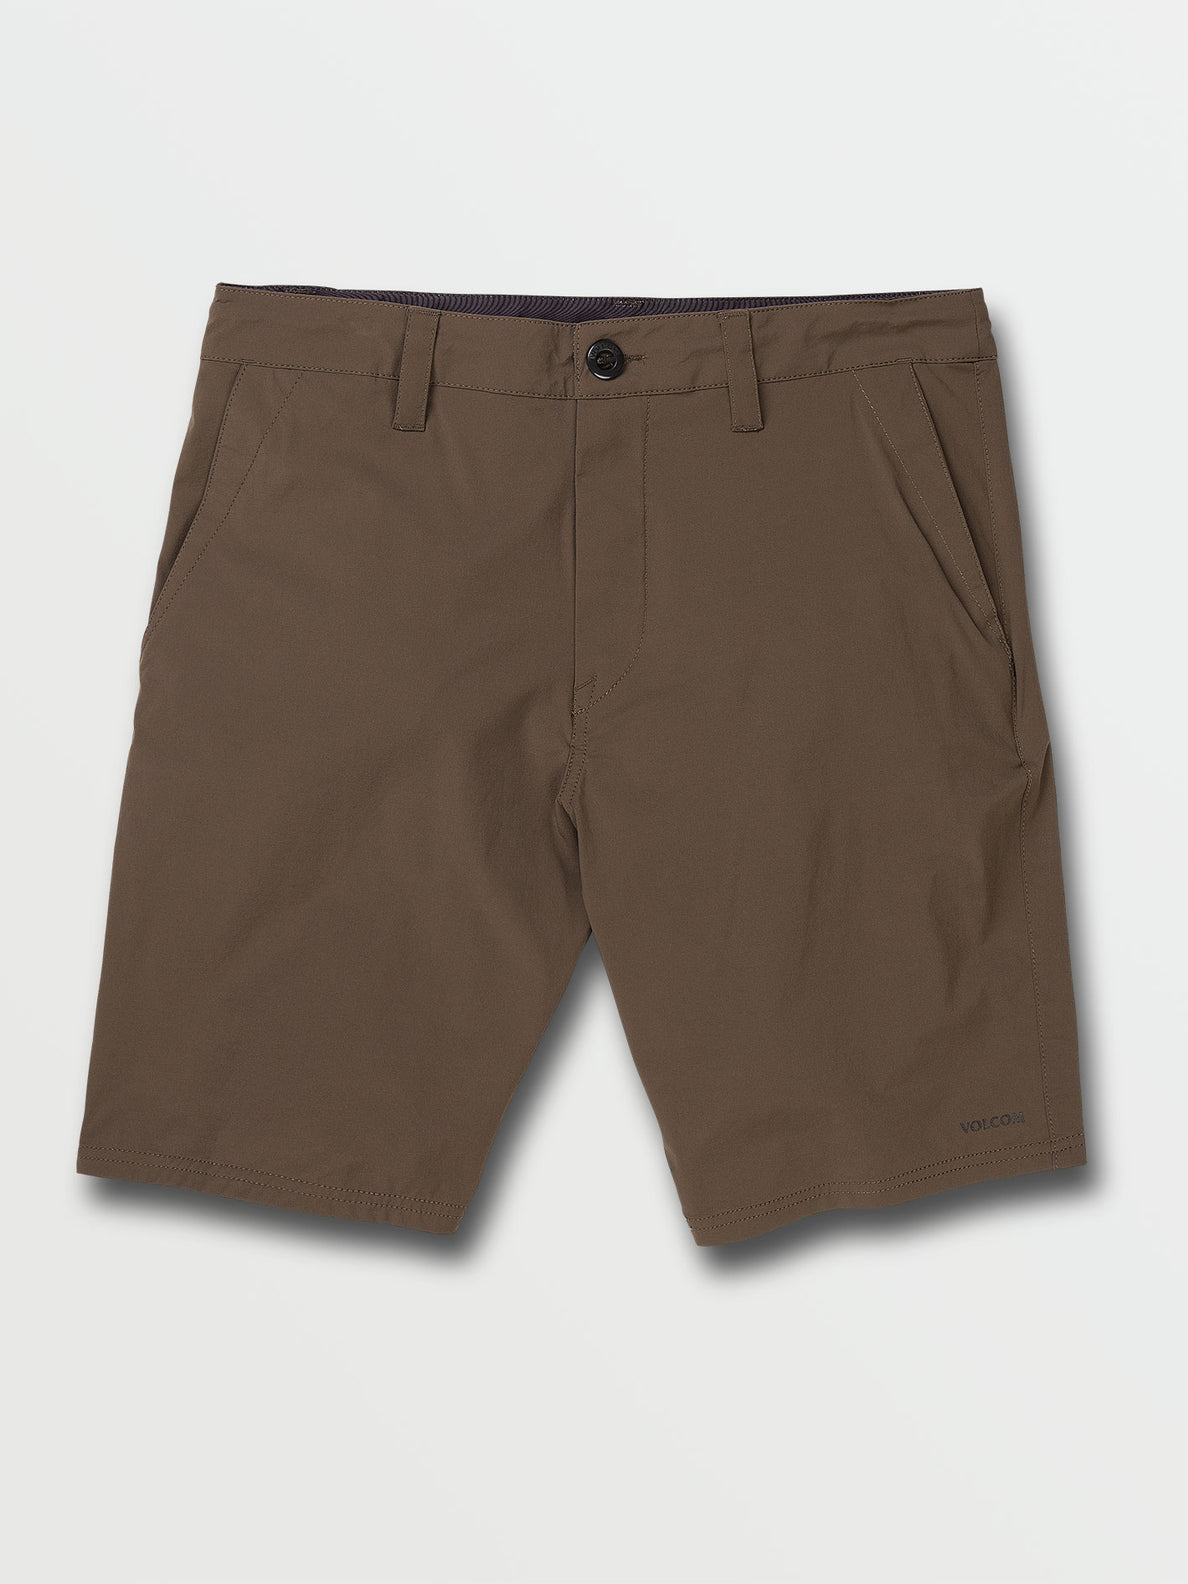 Bohnes Hybrid Shorts - Wren (A3212101_WRE) [F]